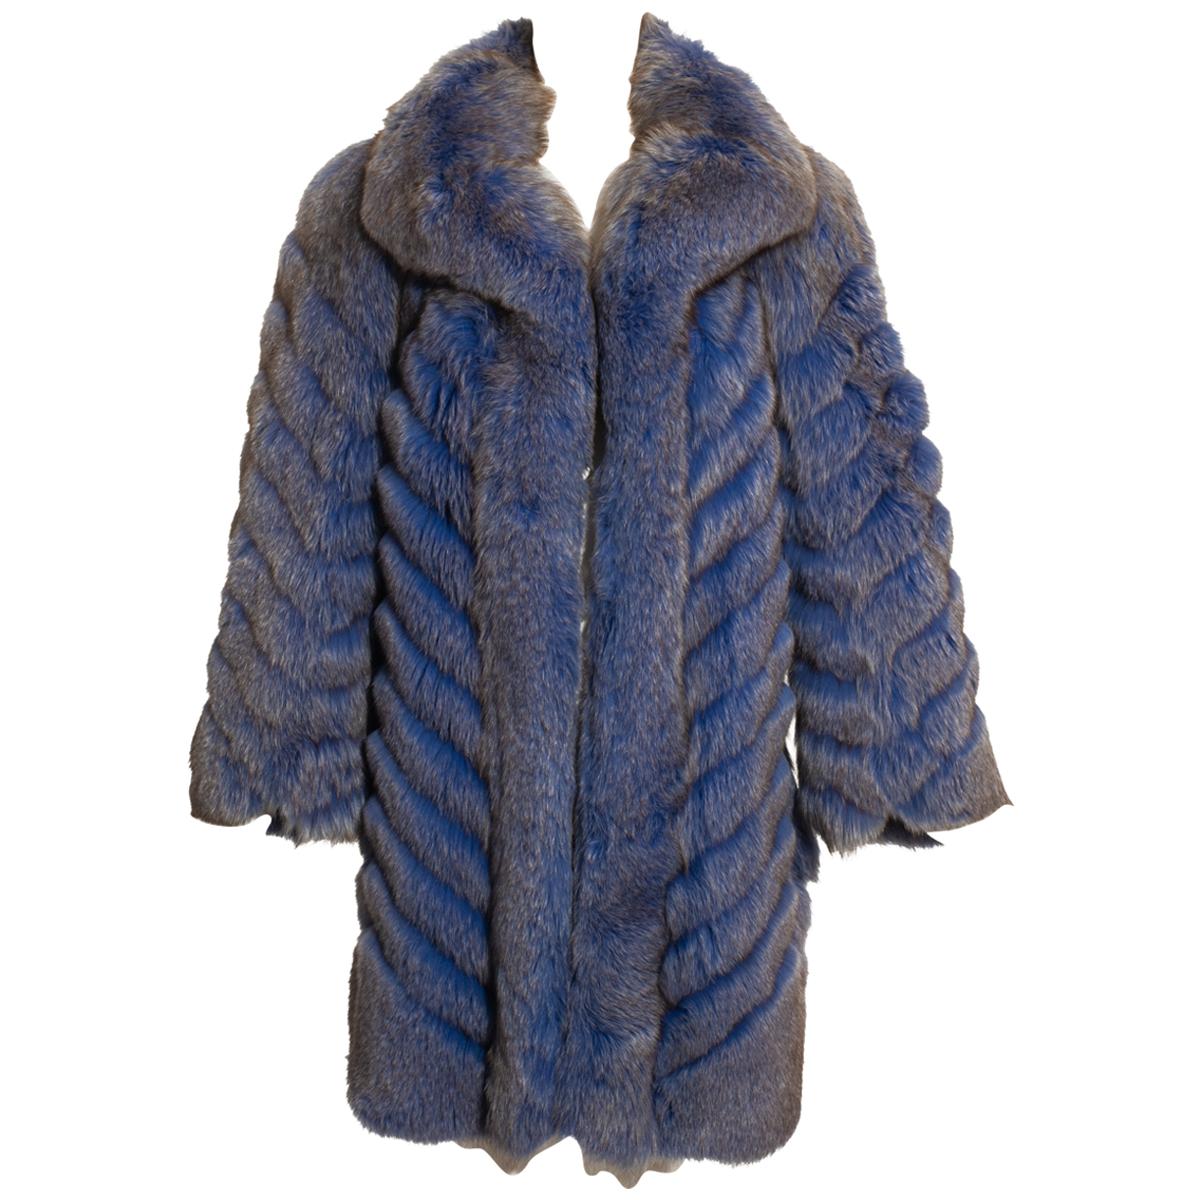 Benjamin Fourrures blue fox fur coat, c. 1980